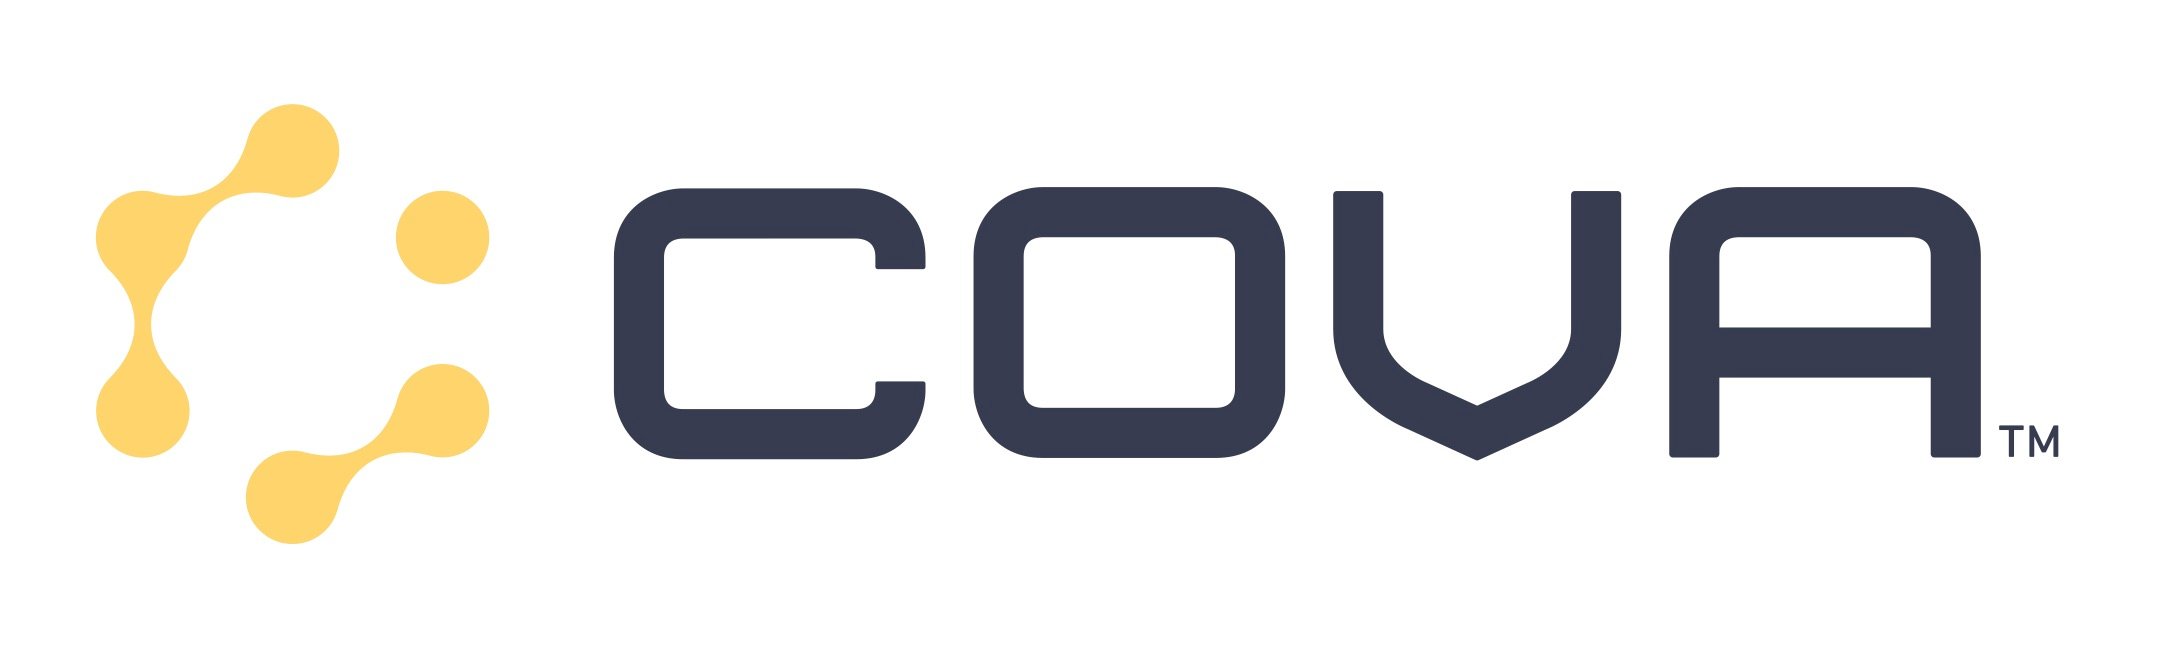 Cova logo_1